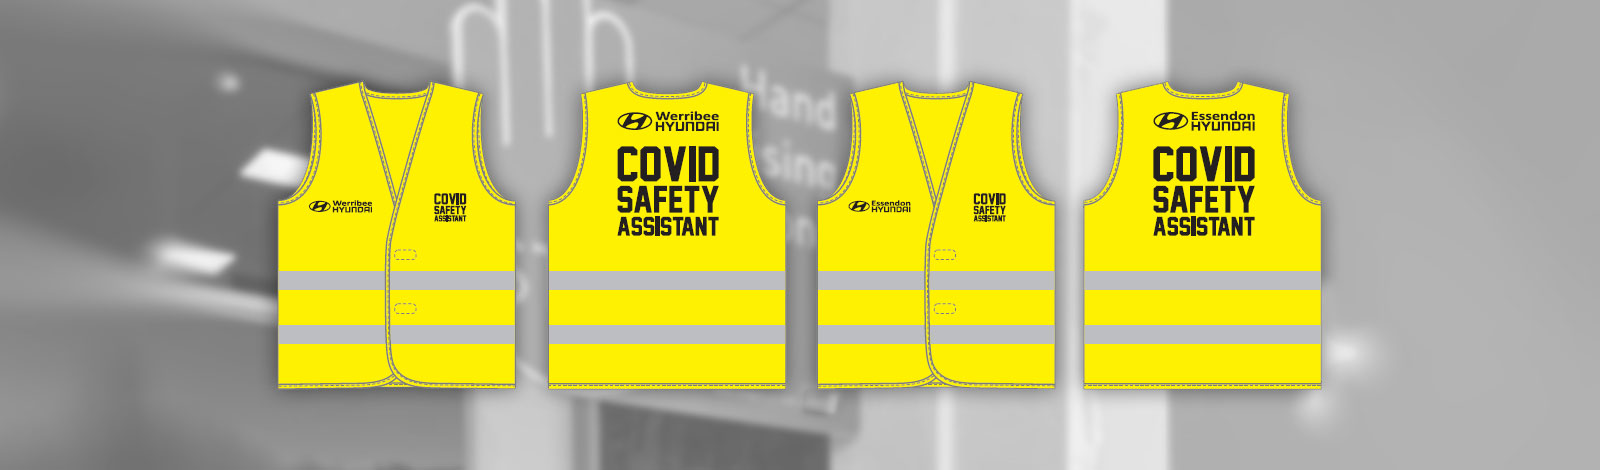 Vic dealer creates COVID assistants